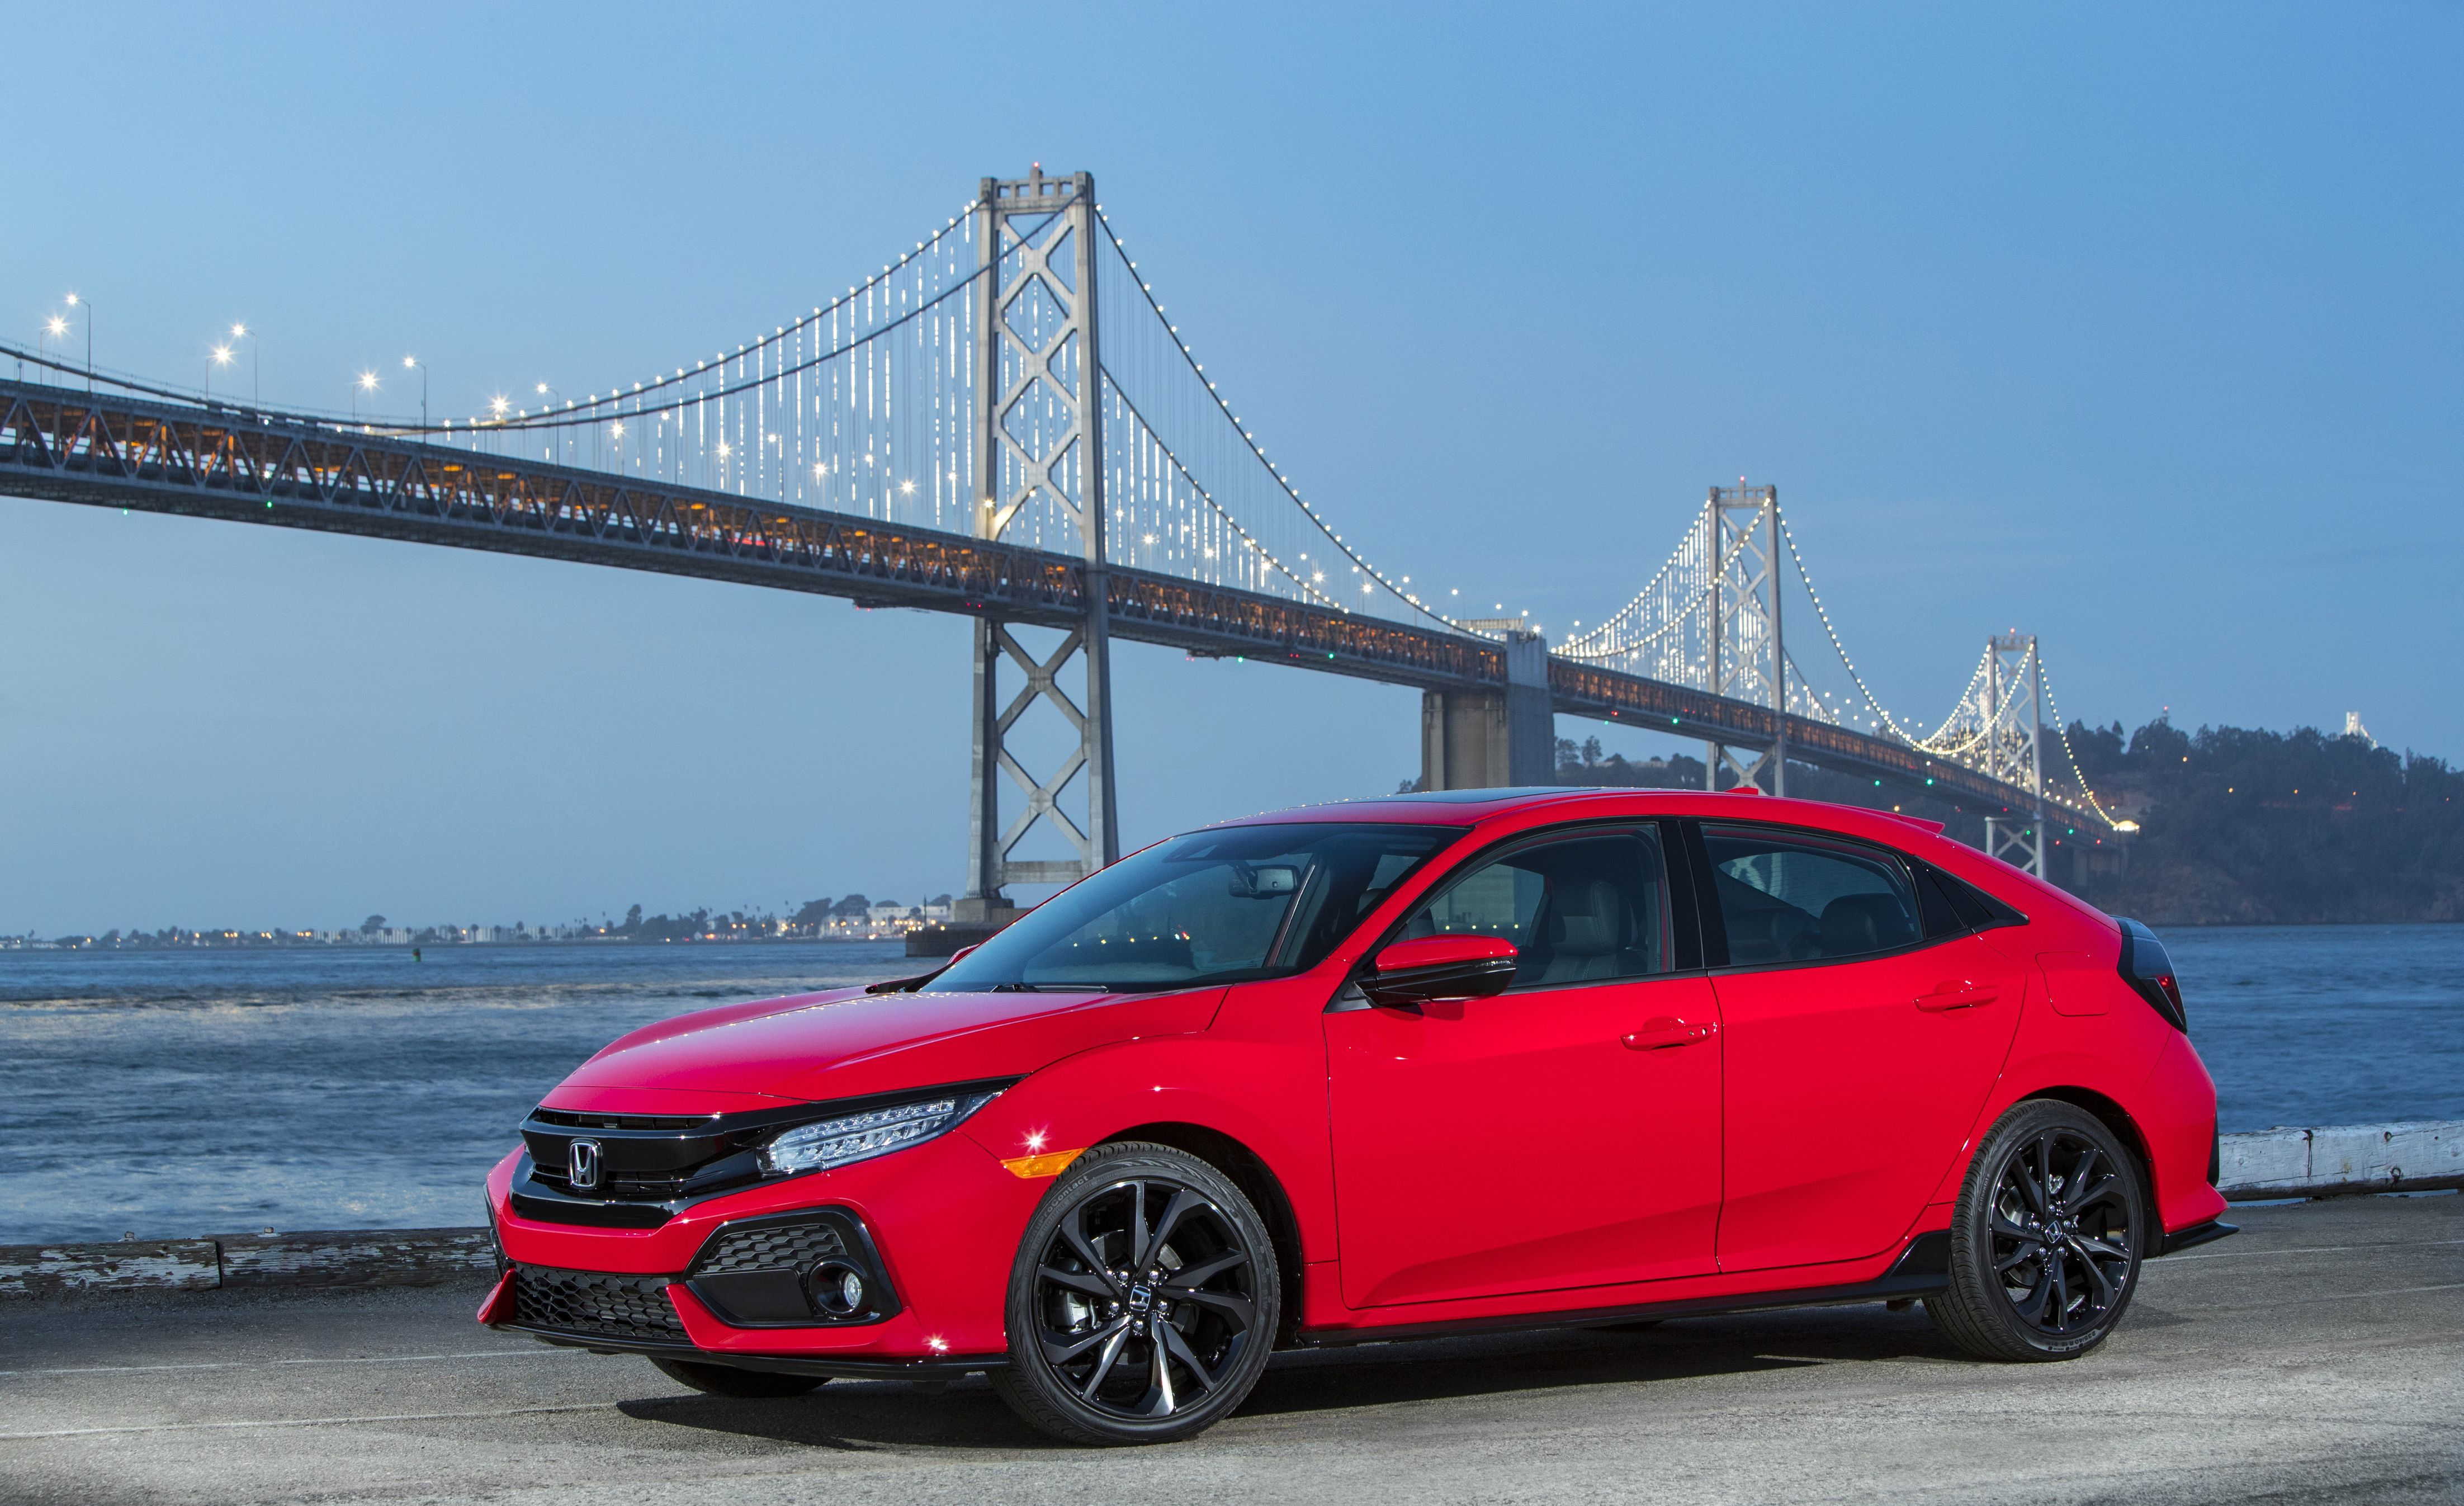 2019 Honda Civic Reviews | Honda Civic Price, Photos, and ...